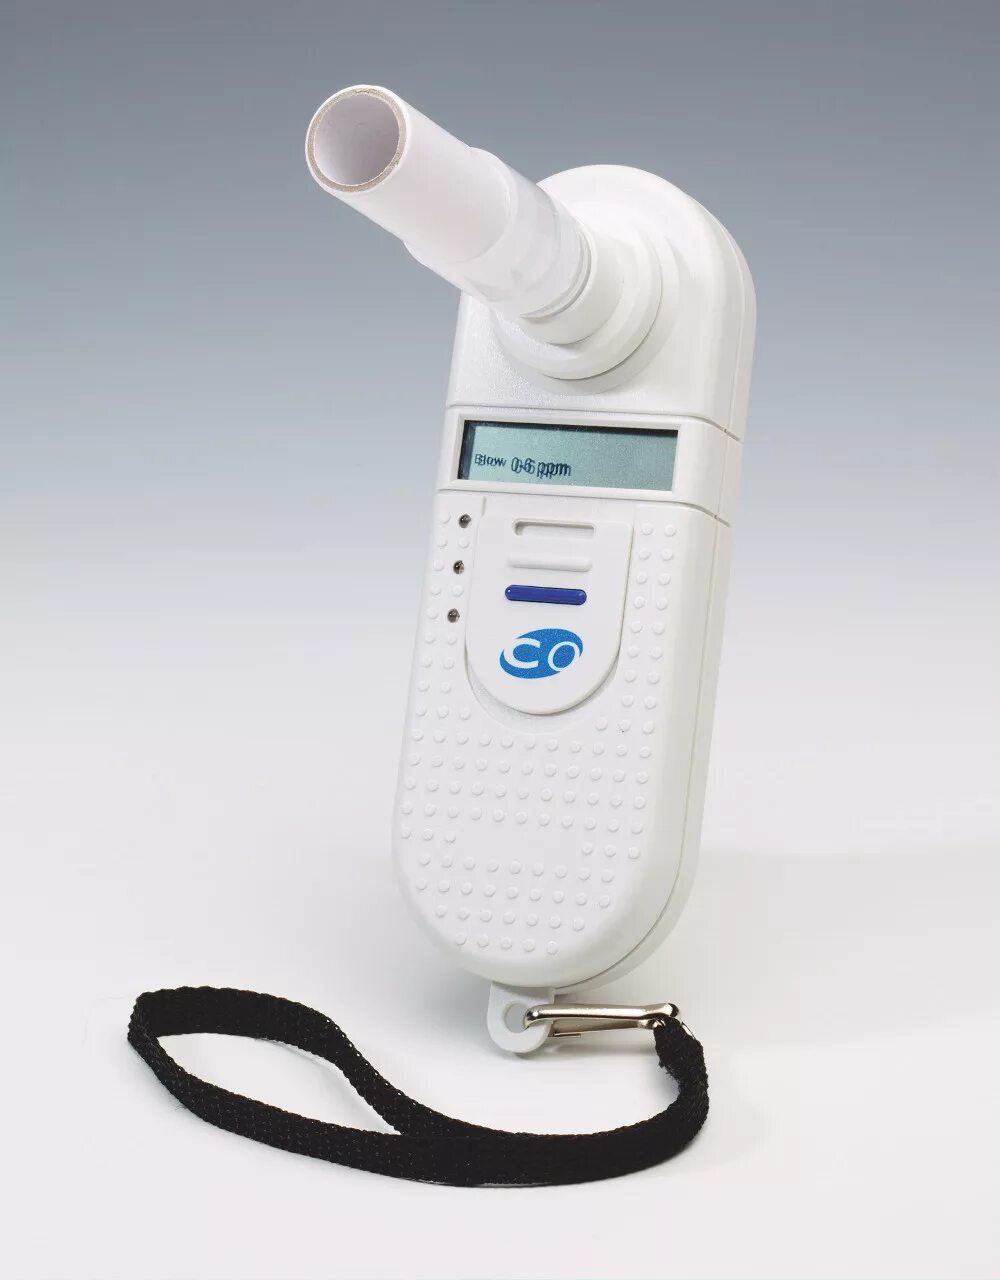 Прибор микро. Газоанализатор Smoke check (смокелайзер). Анализатор окиси углерода АНКАТ-7635 Smokerlyzer. Газоанализатор окиси углерода (смокелайзер). Смокелайзер анализатор окиси углерода выдыхаемого воздуха.